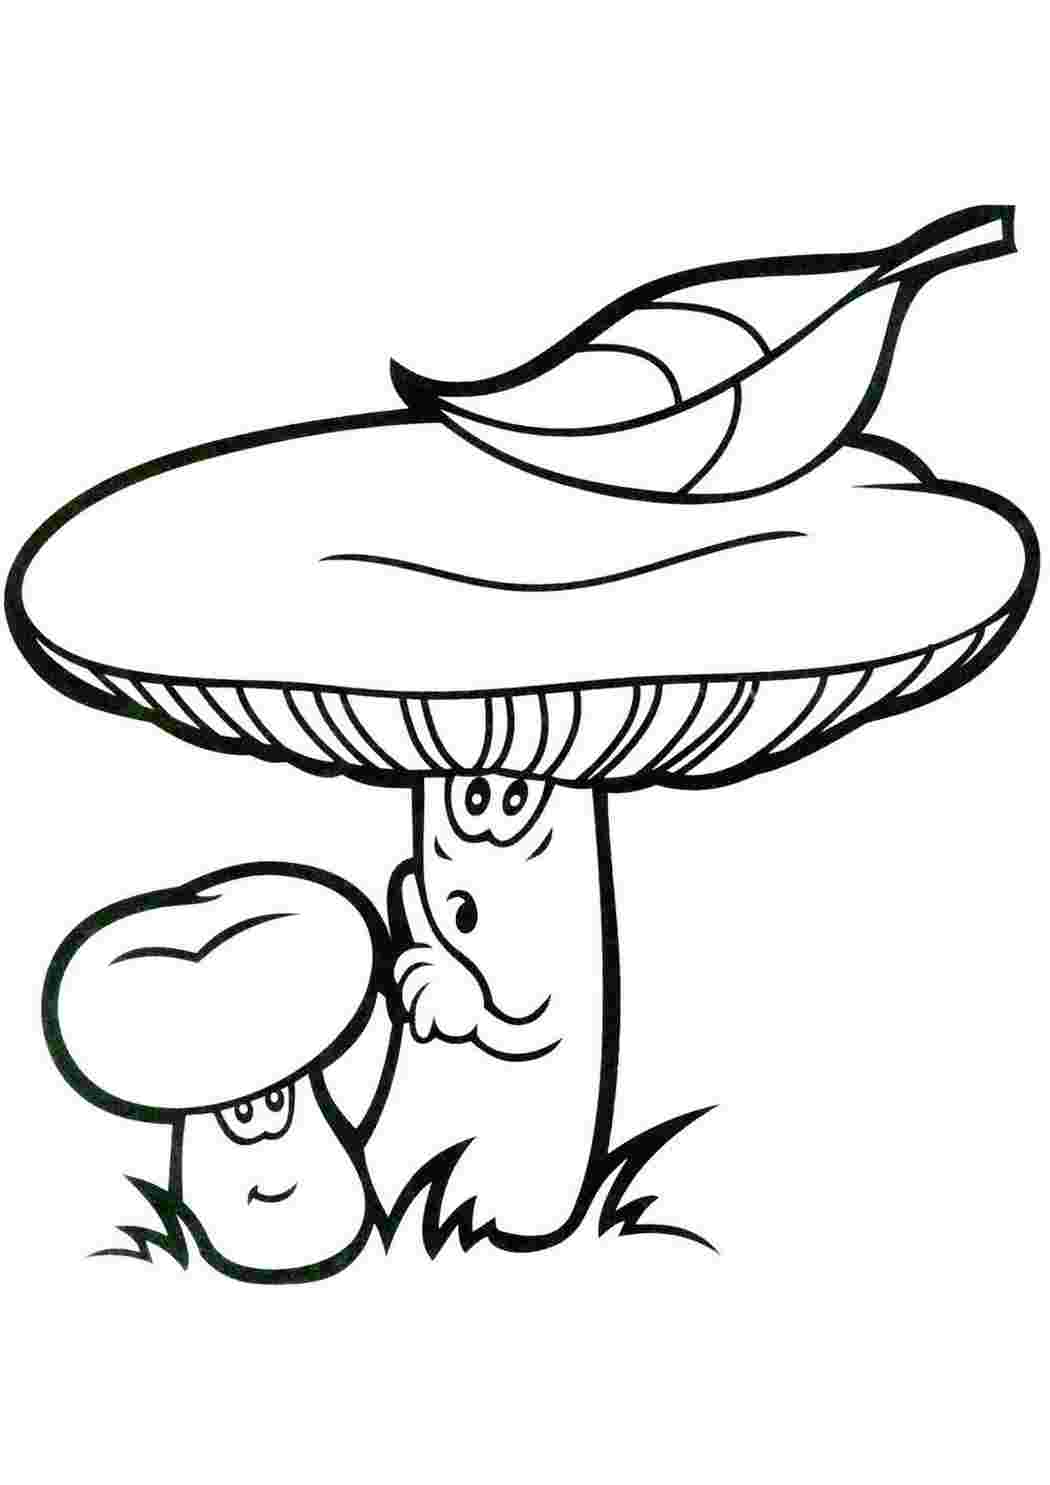 Как нарисовать гриб мухомор | Рисунок и раскраска |How to draw a mushroom | Drawing and coloring |